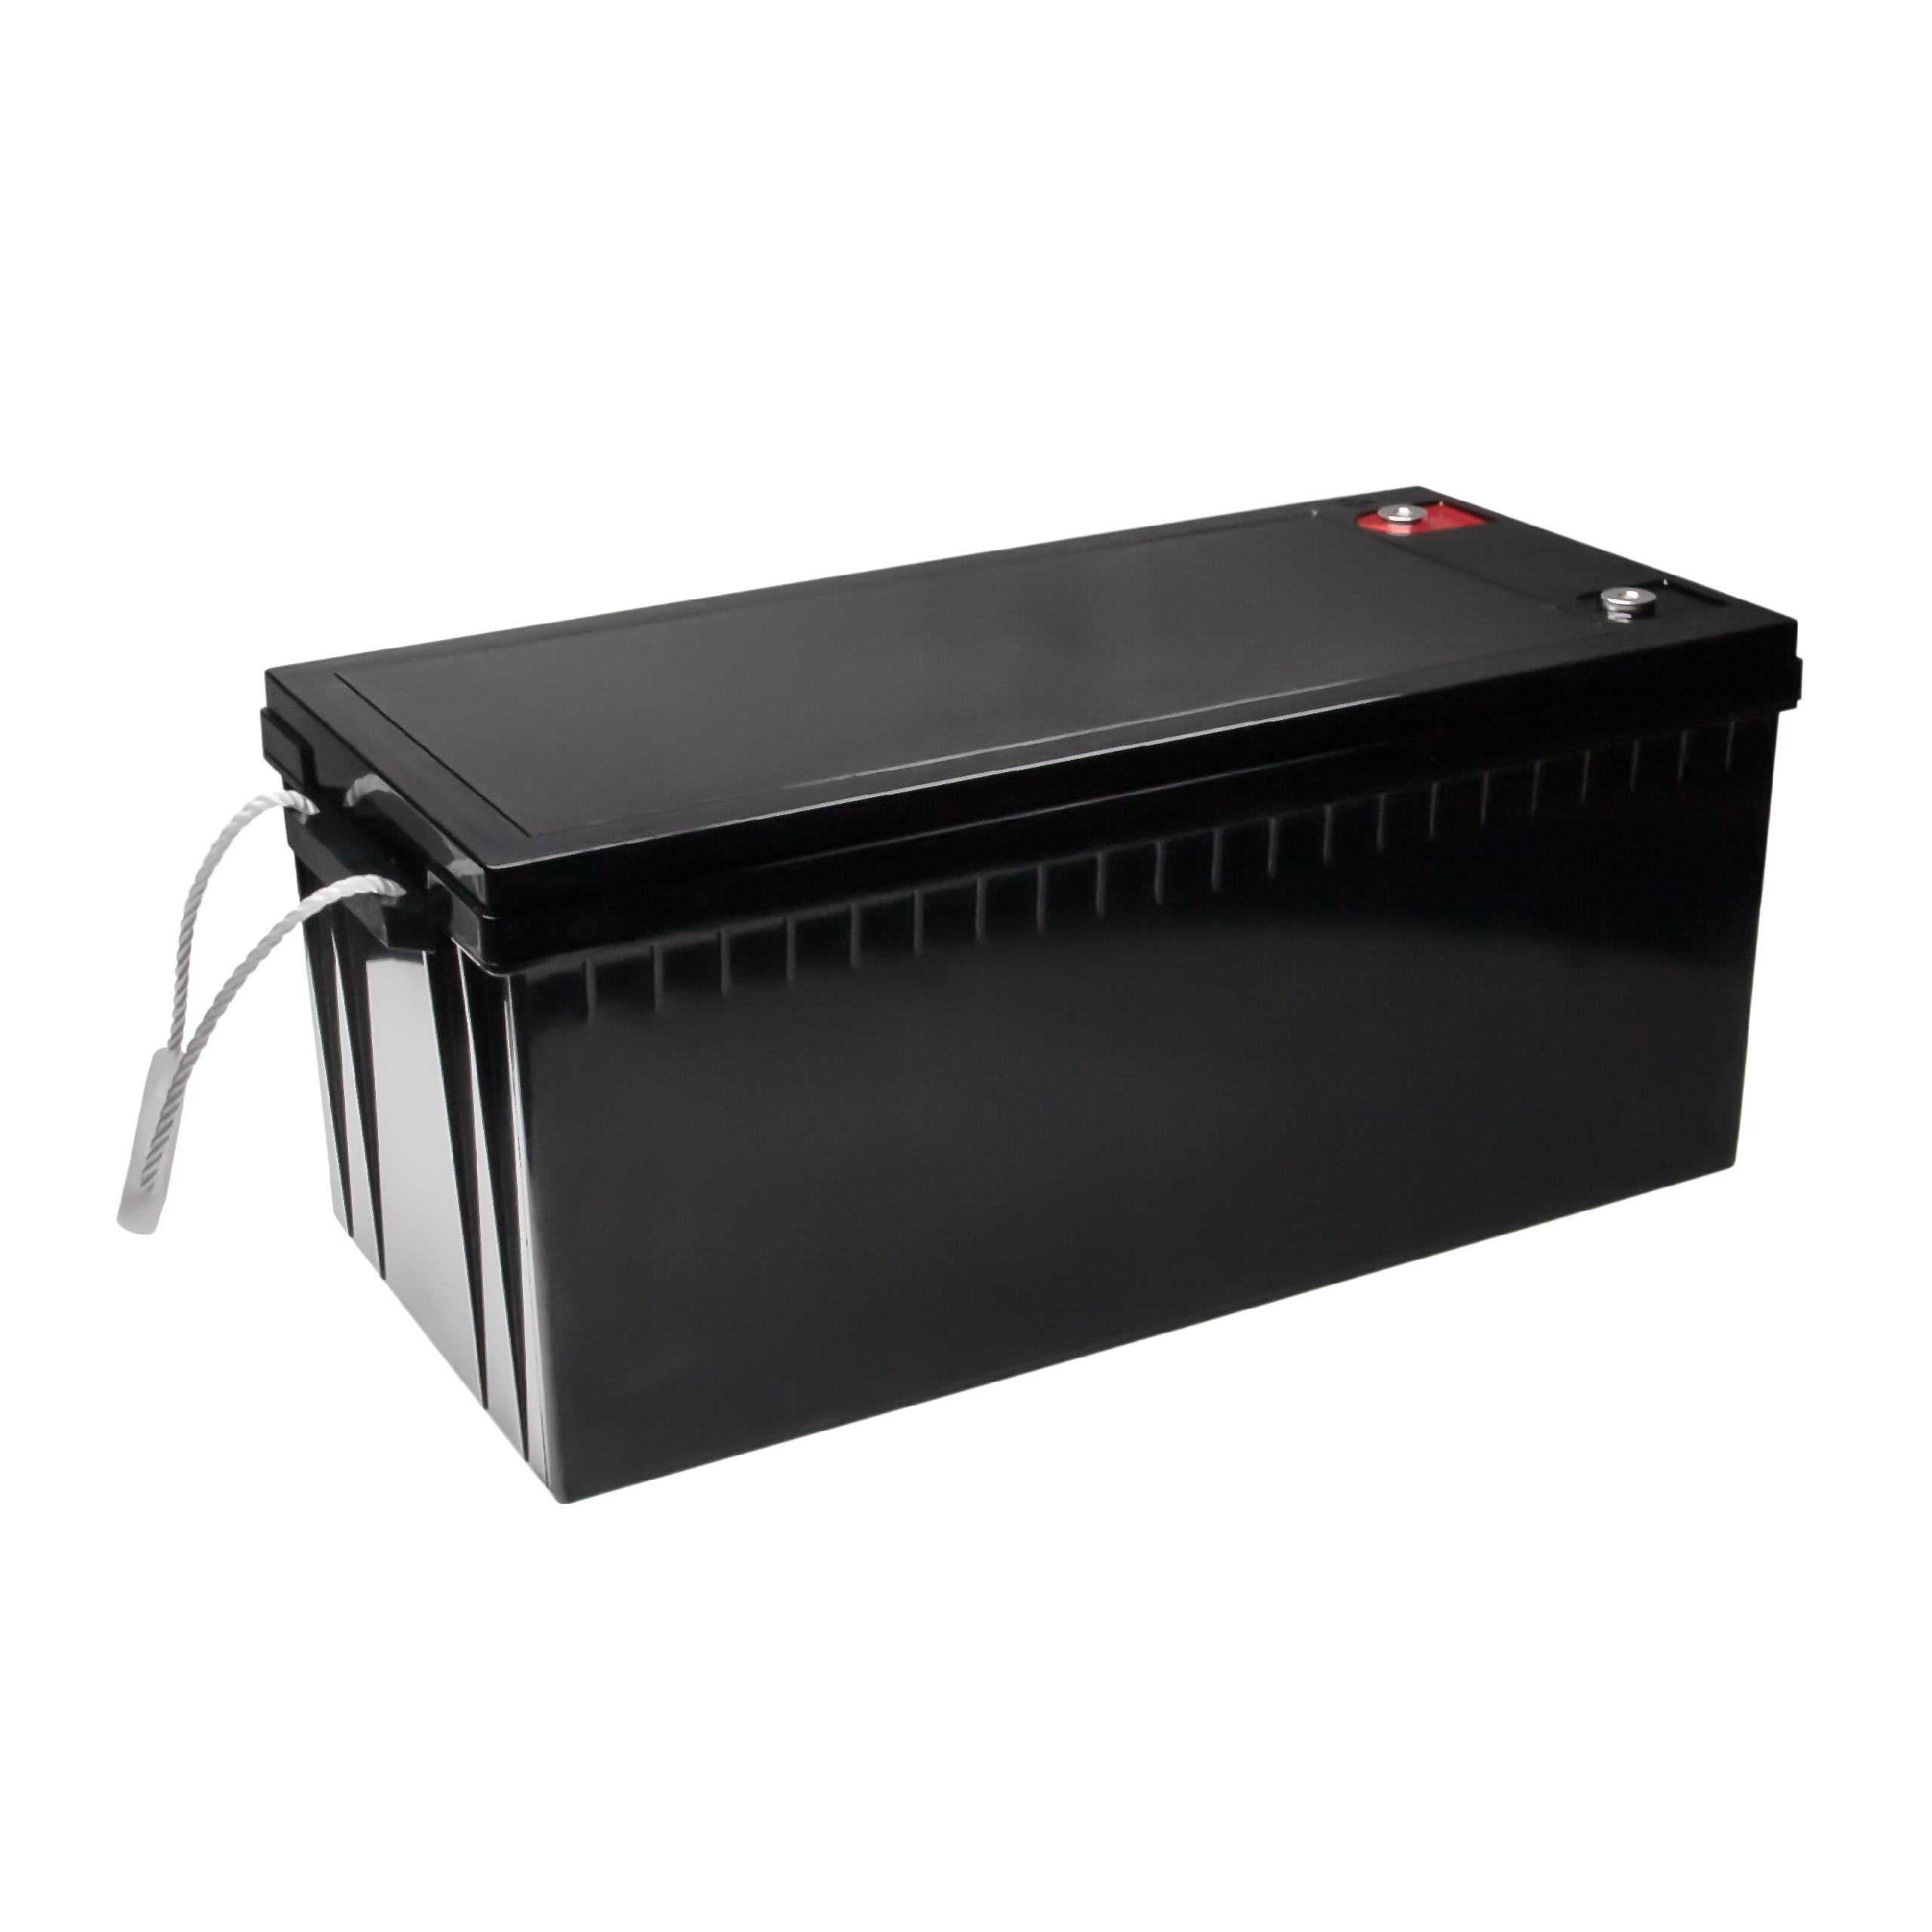 Bordbatterie Akku passend für Wohnmobil, Boot, Solaranlage - 200 Ah 12,8V LiFePO4, 200000mAh, schwarz